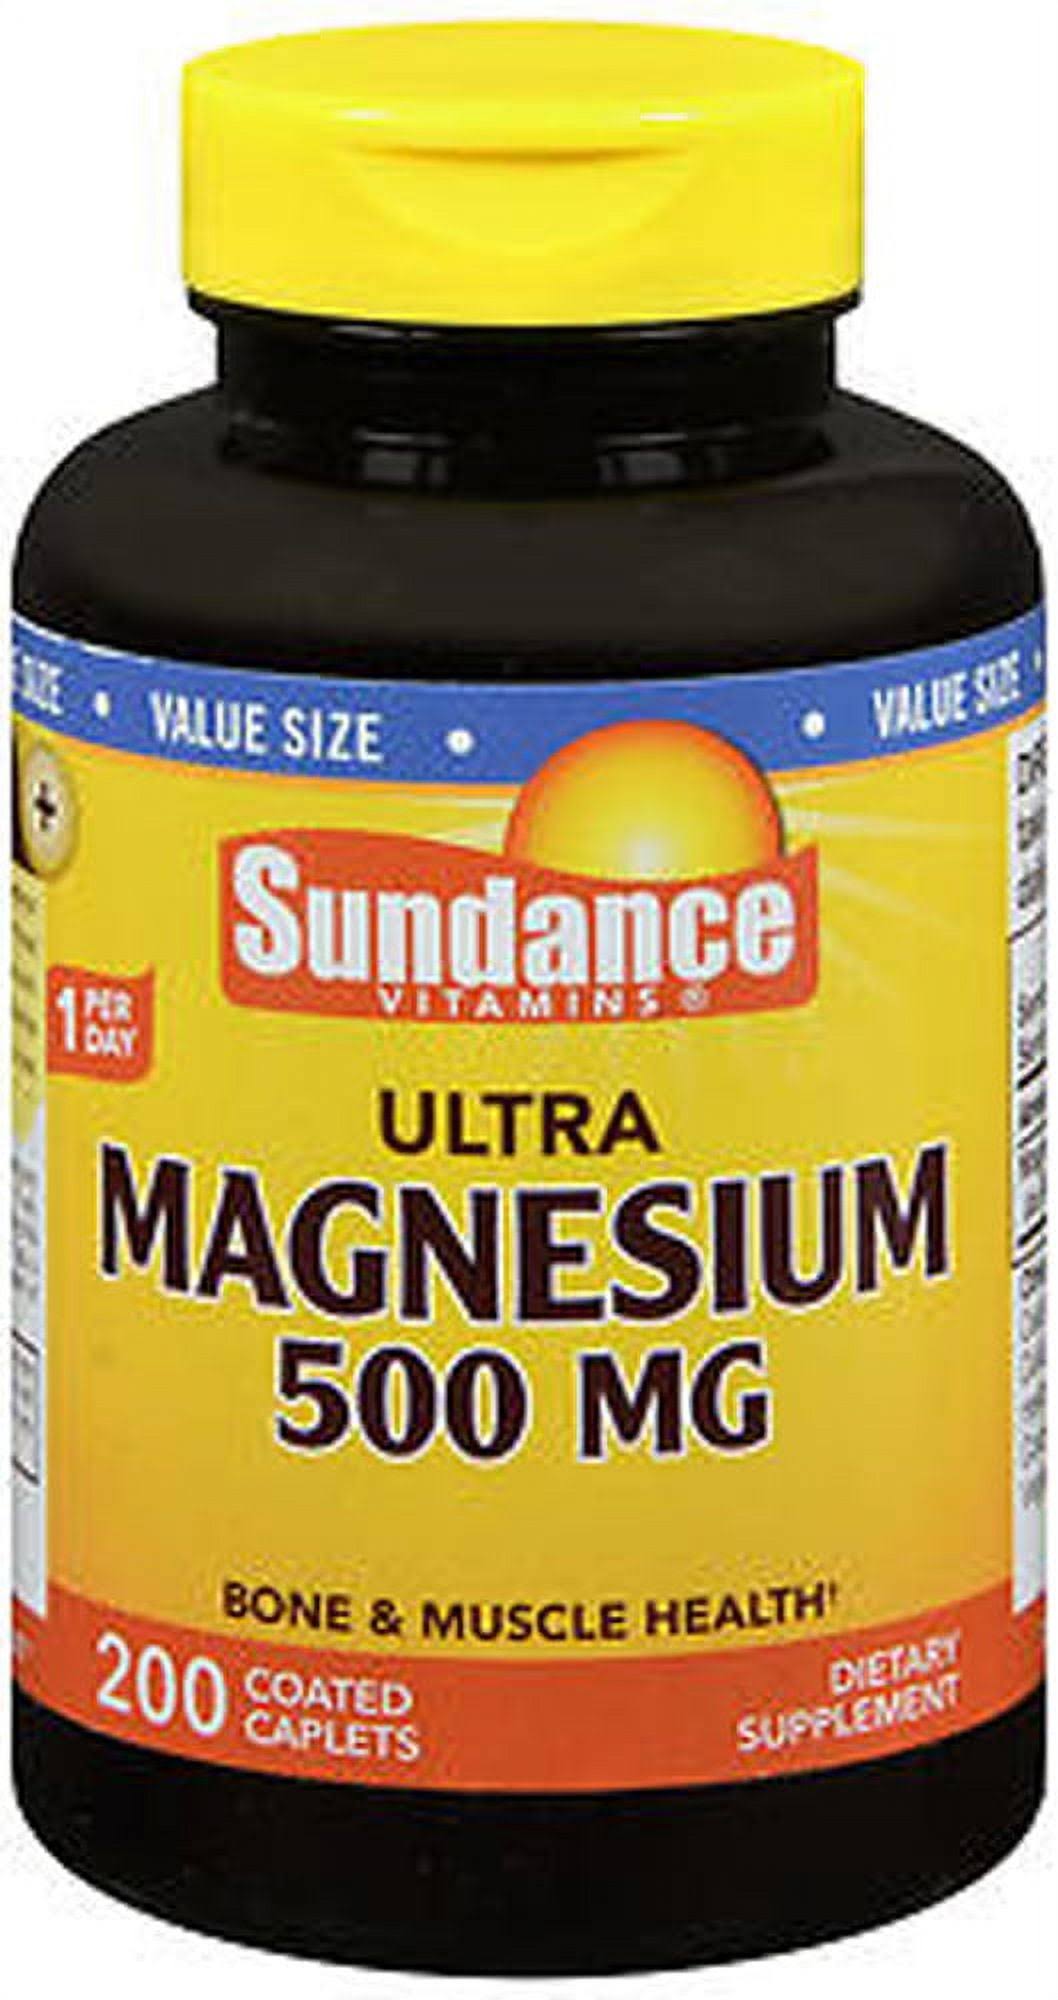 Sundance Magnesium 500 mg Tablets, 200 Count